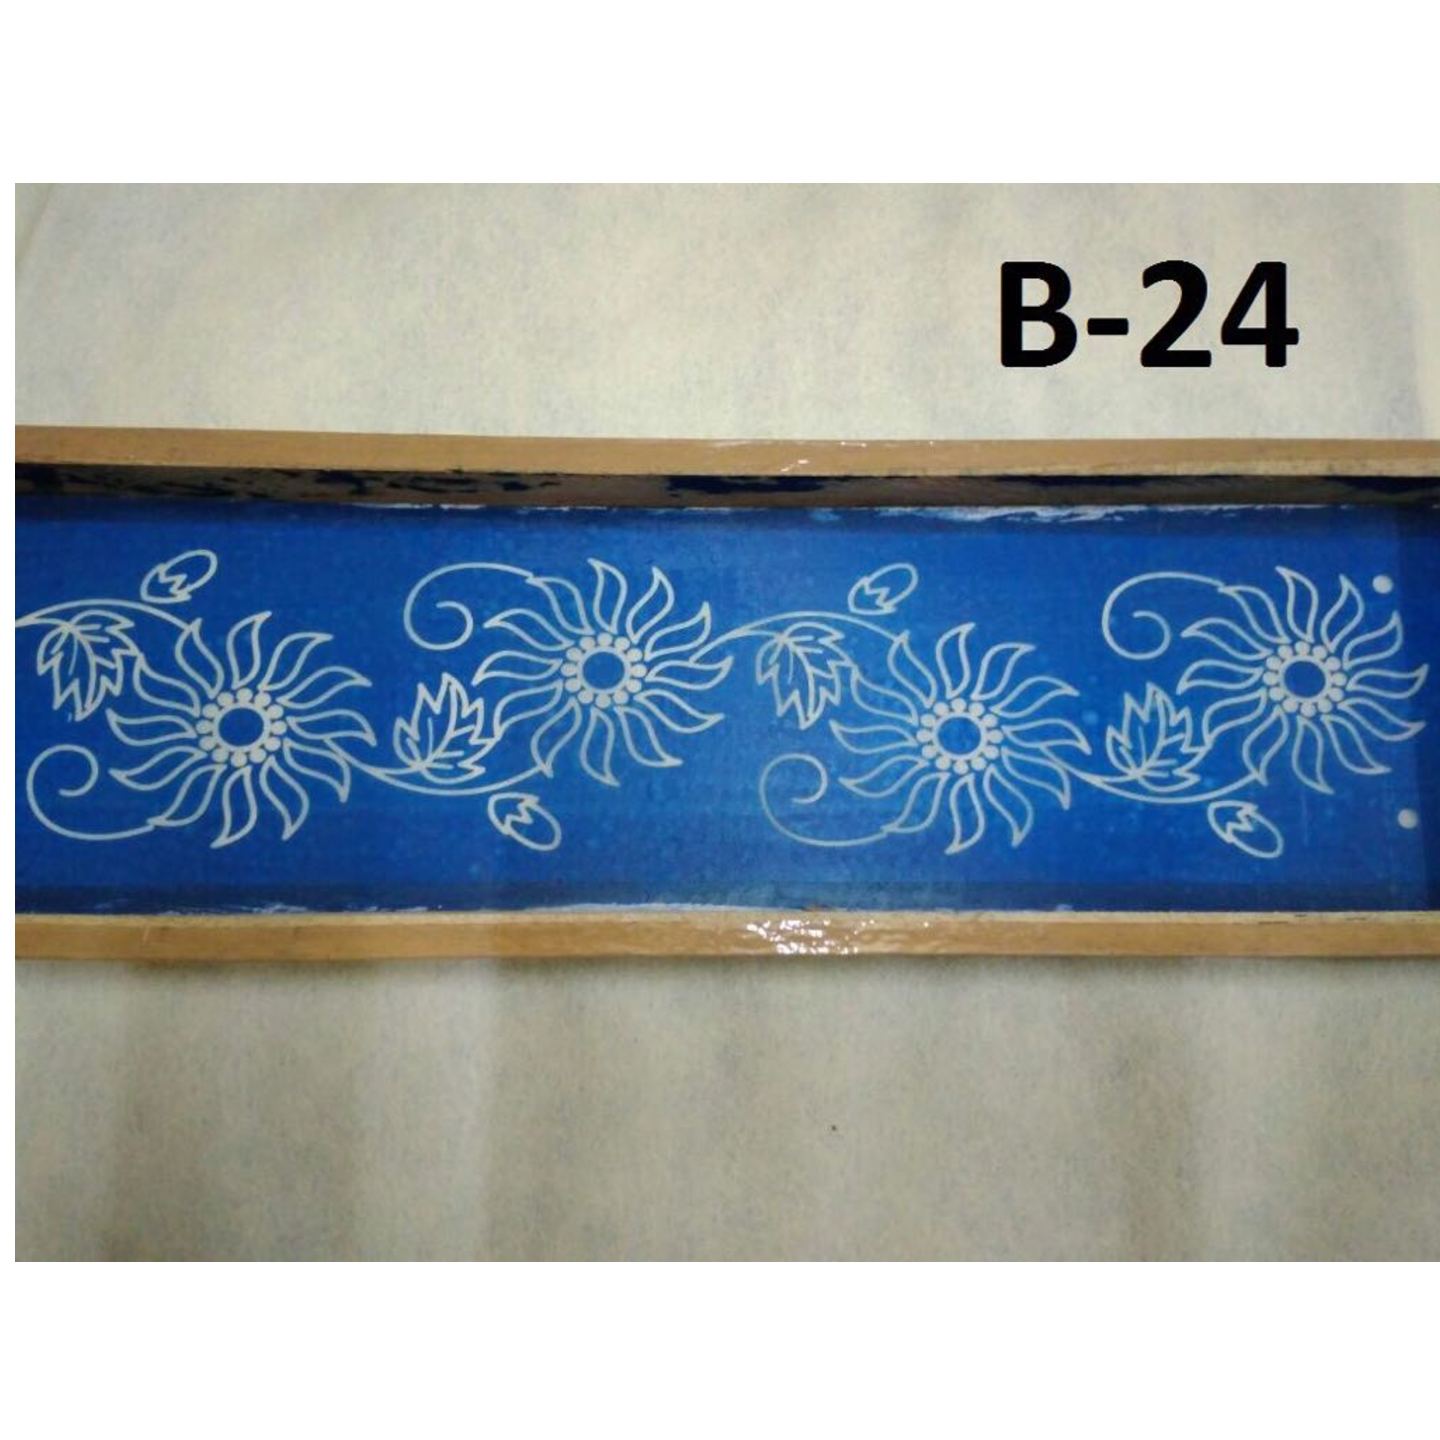 Wooden Floral Border Rangoli stencil of 17 by 5 inch B-24